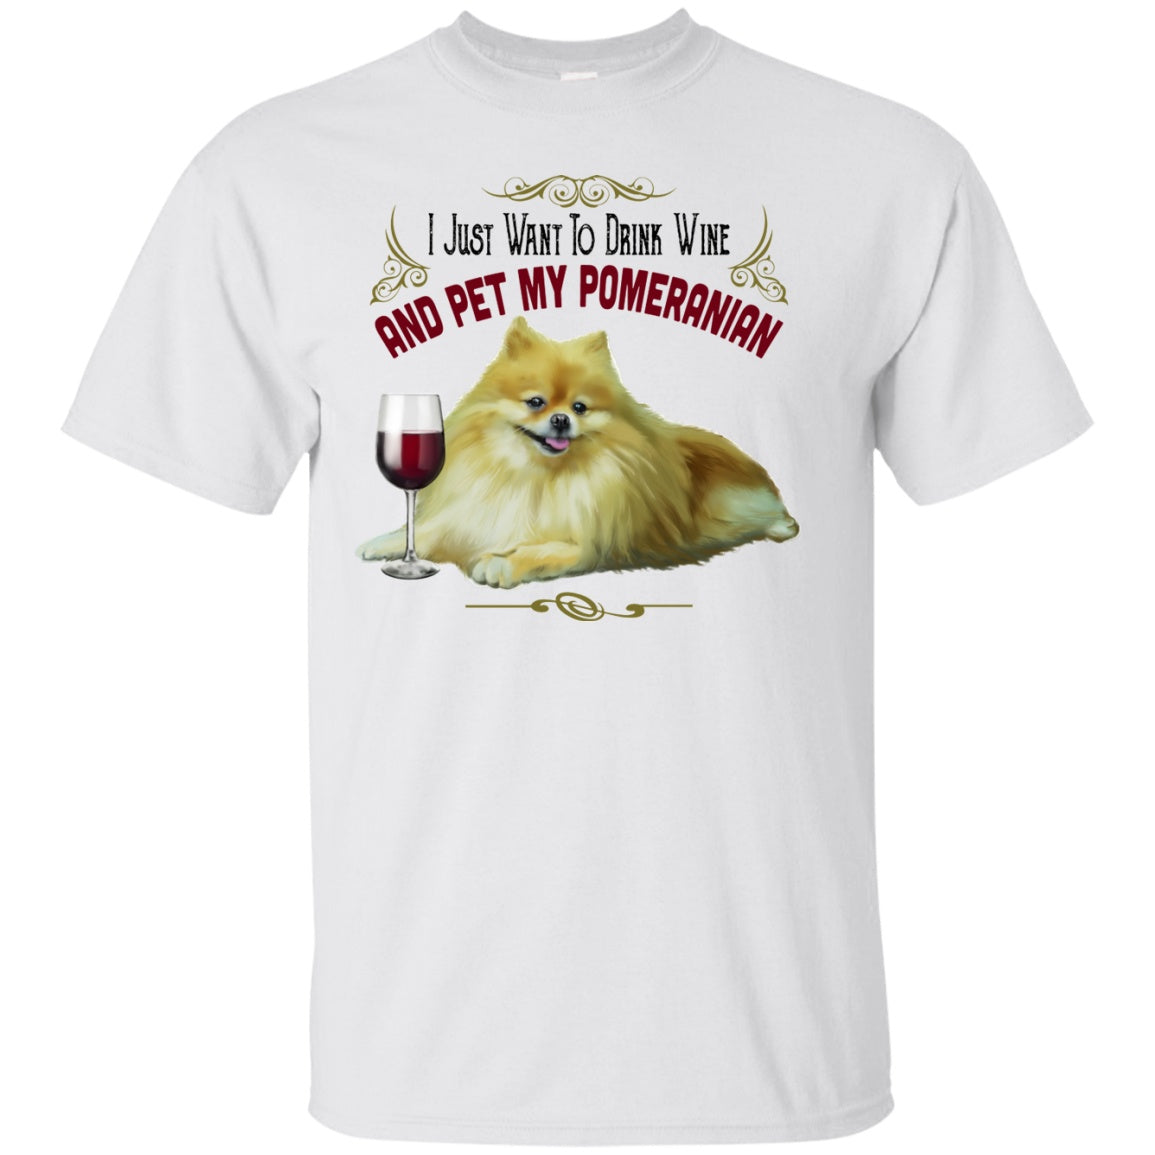 Pomeranian Funny Shirts For Women Girls - GoneBold.gift